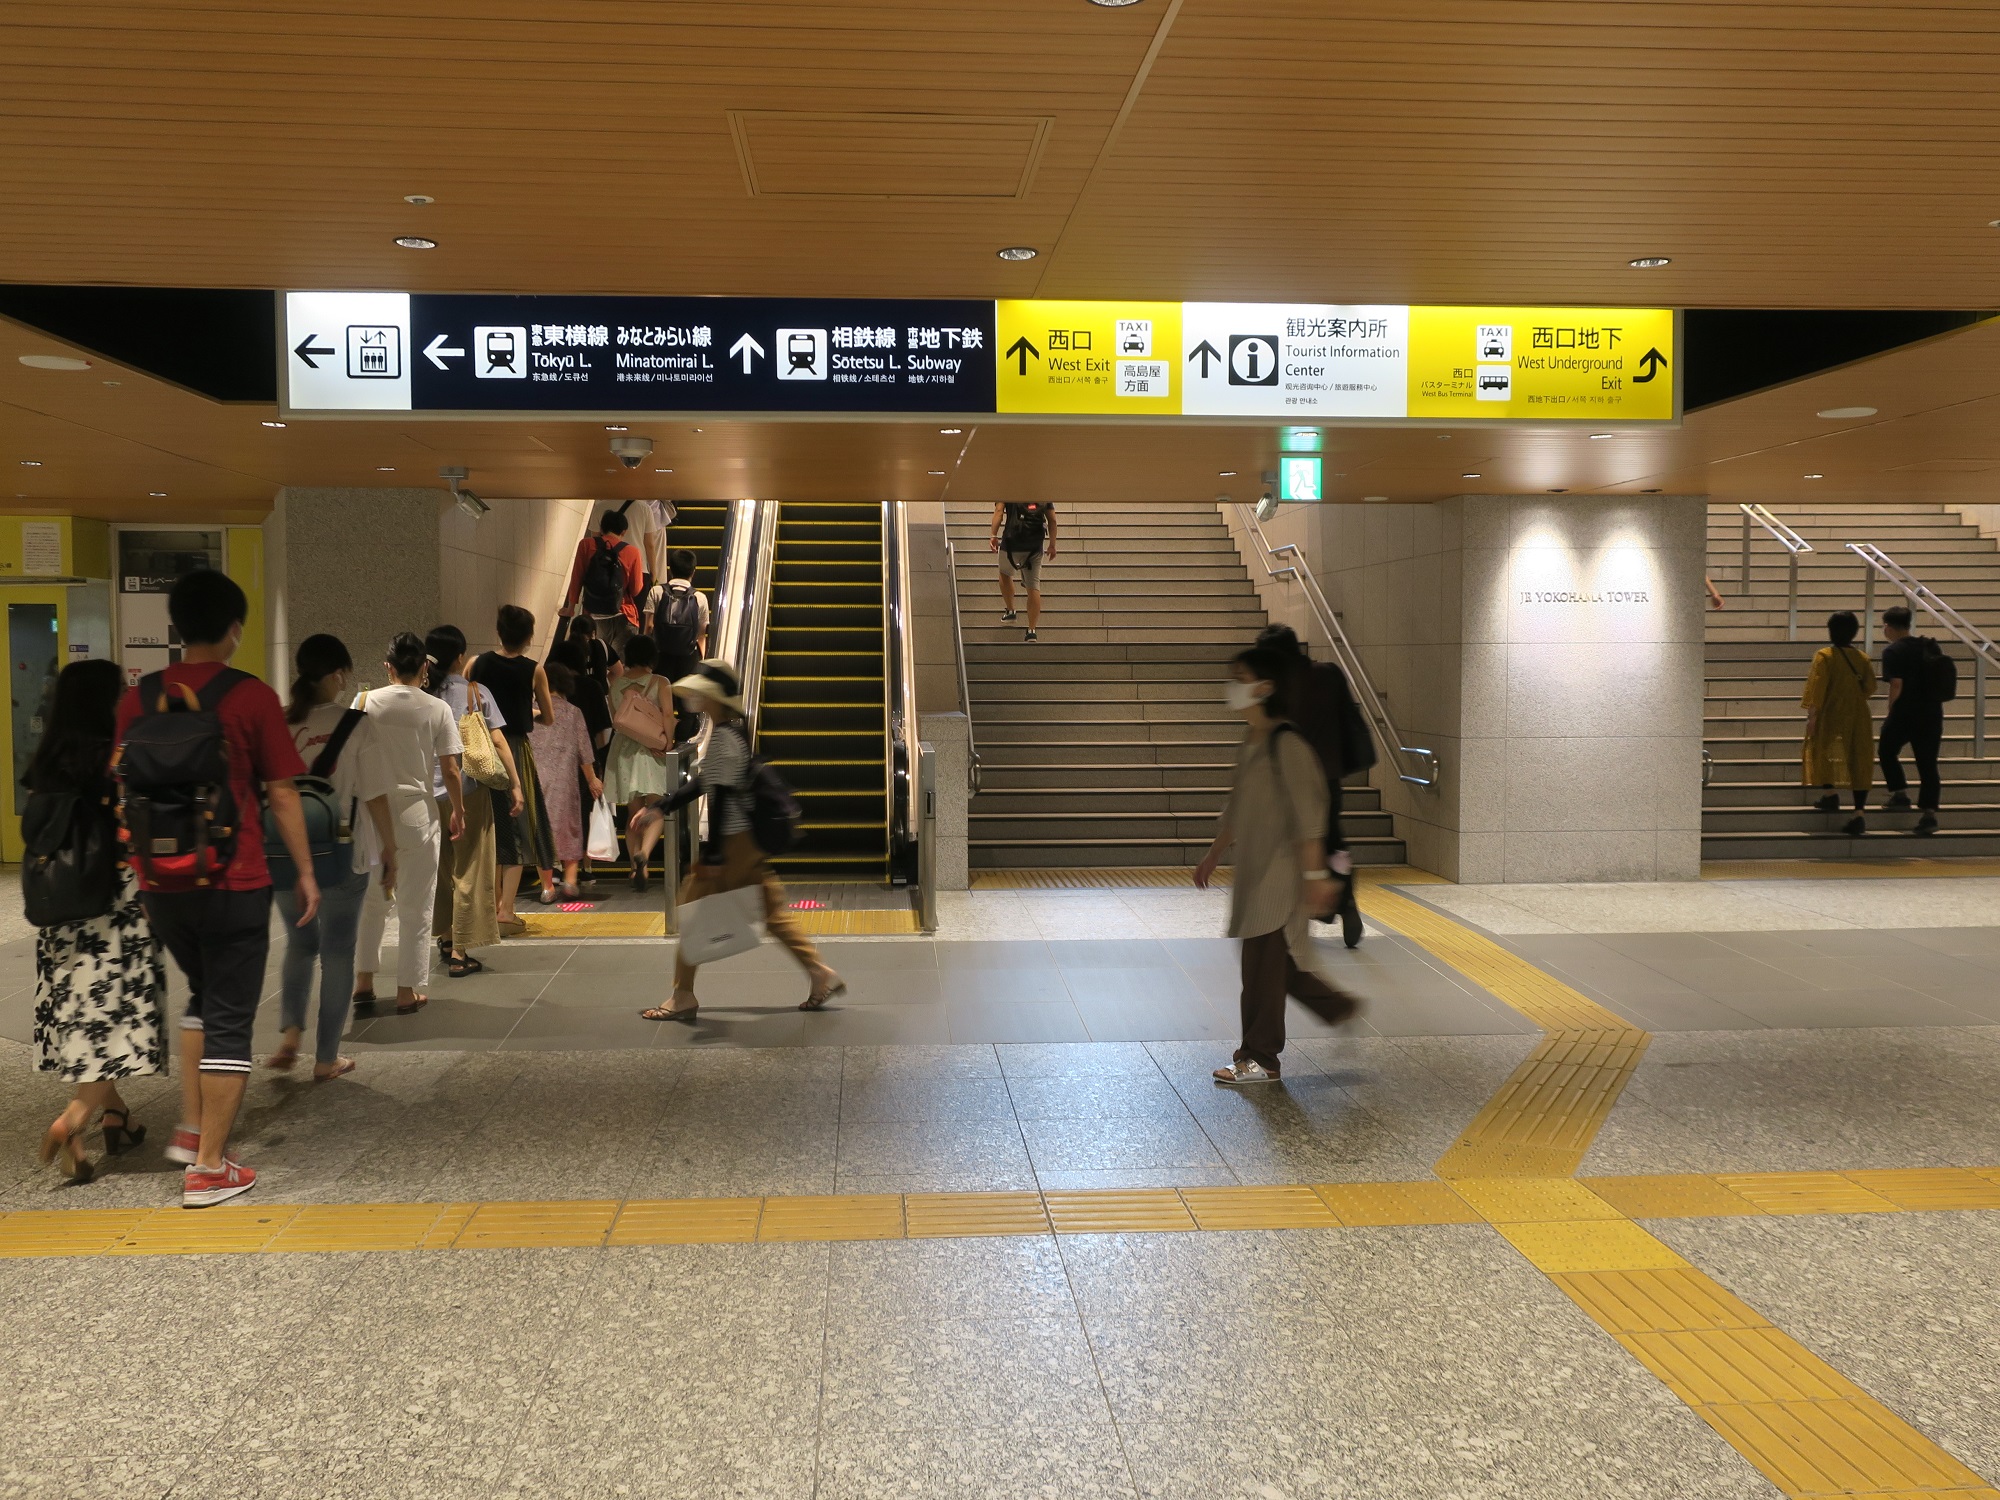 JR東海道線 横浜駅 相鉄線 市営地下鉄 東急東横線 みなとみらい線への乗換案内表示